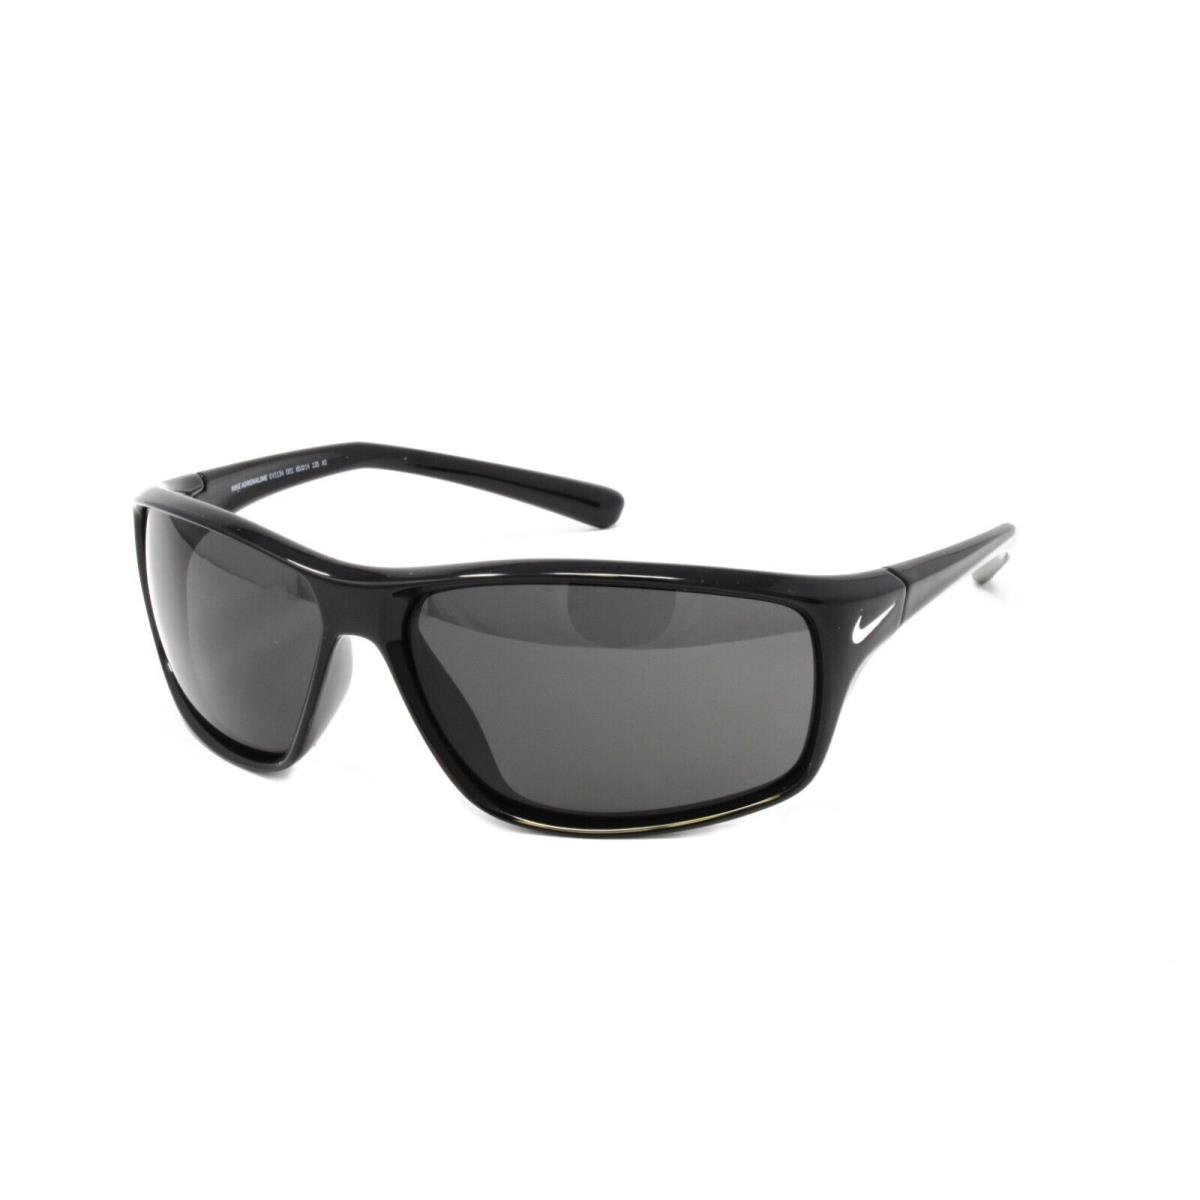 Nike Sunglasses Adrenaline EV1134 001 Shiny Black White 65mm Grey Lens - Frame: Black, Lens: Gray